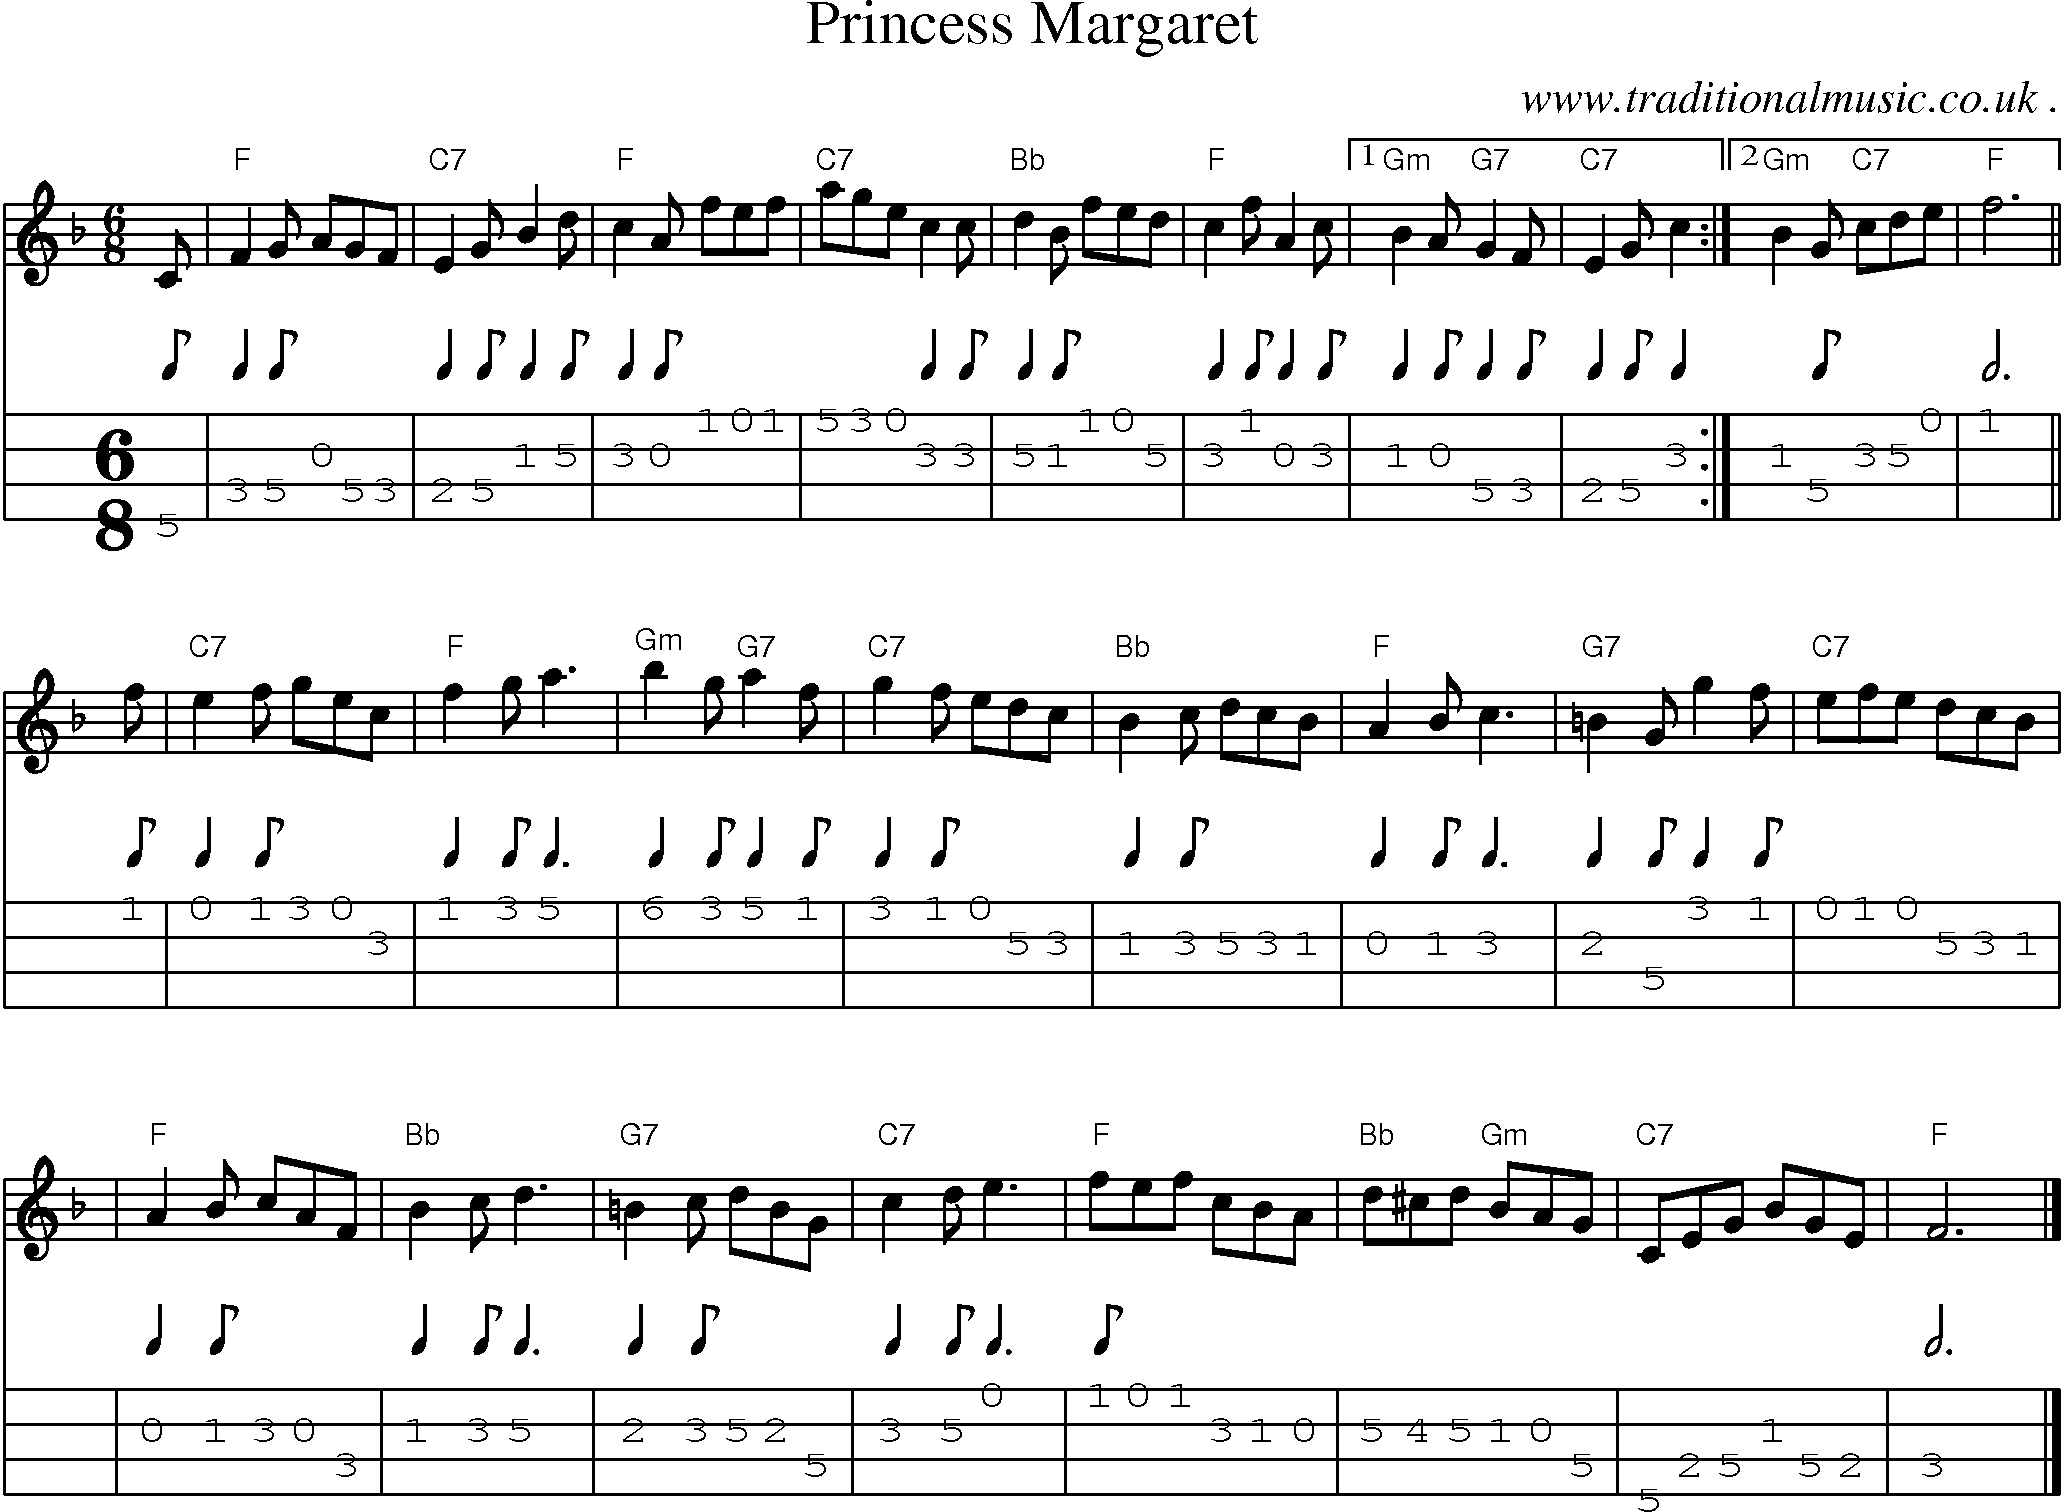 Sheet-music  score, Chords and Mandolin Tabs for Princess Margaret